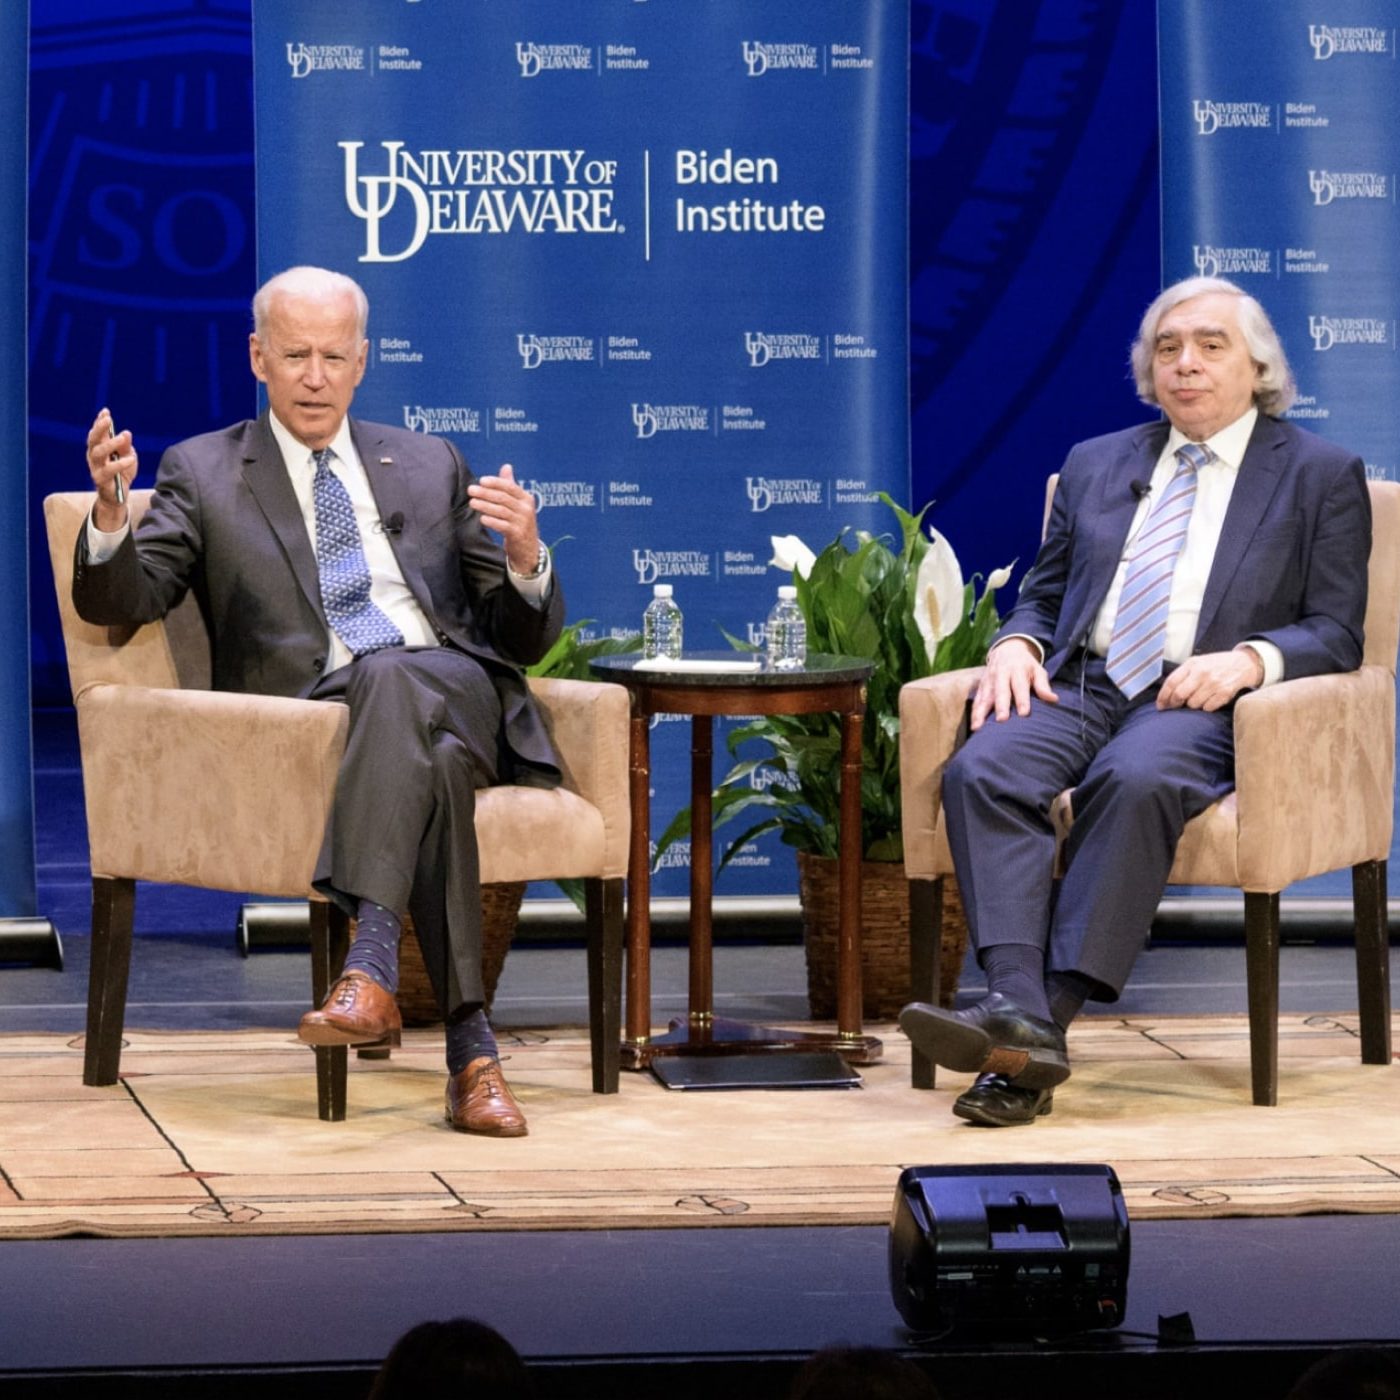 Joe Biden and Ernest Moniz discuss climate change